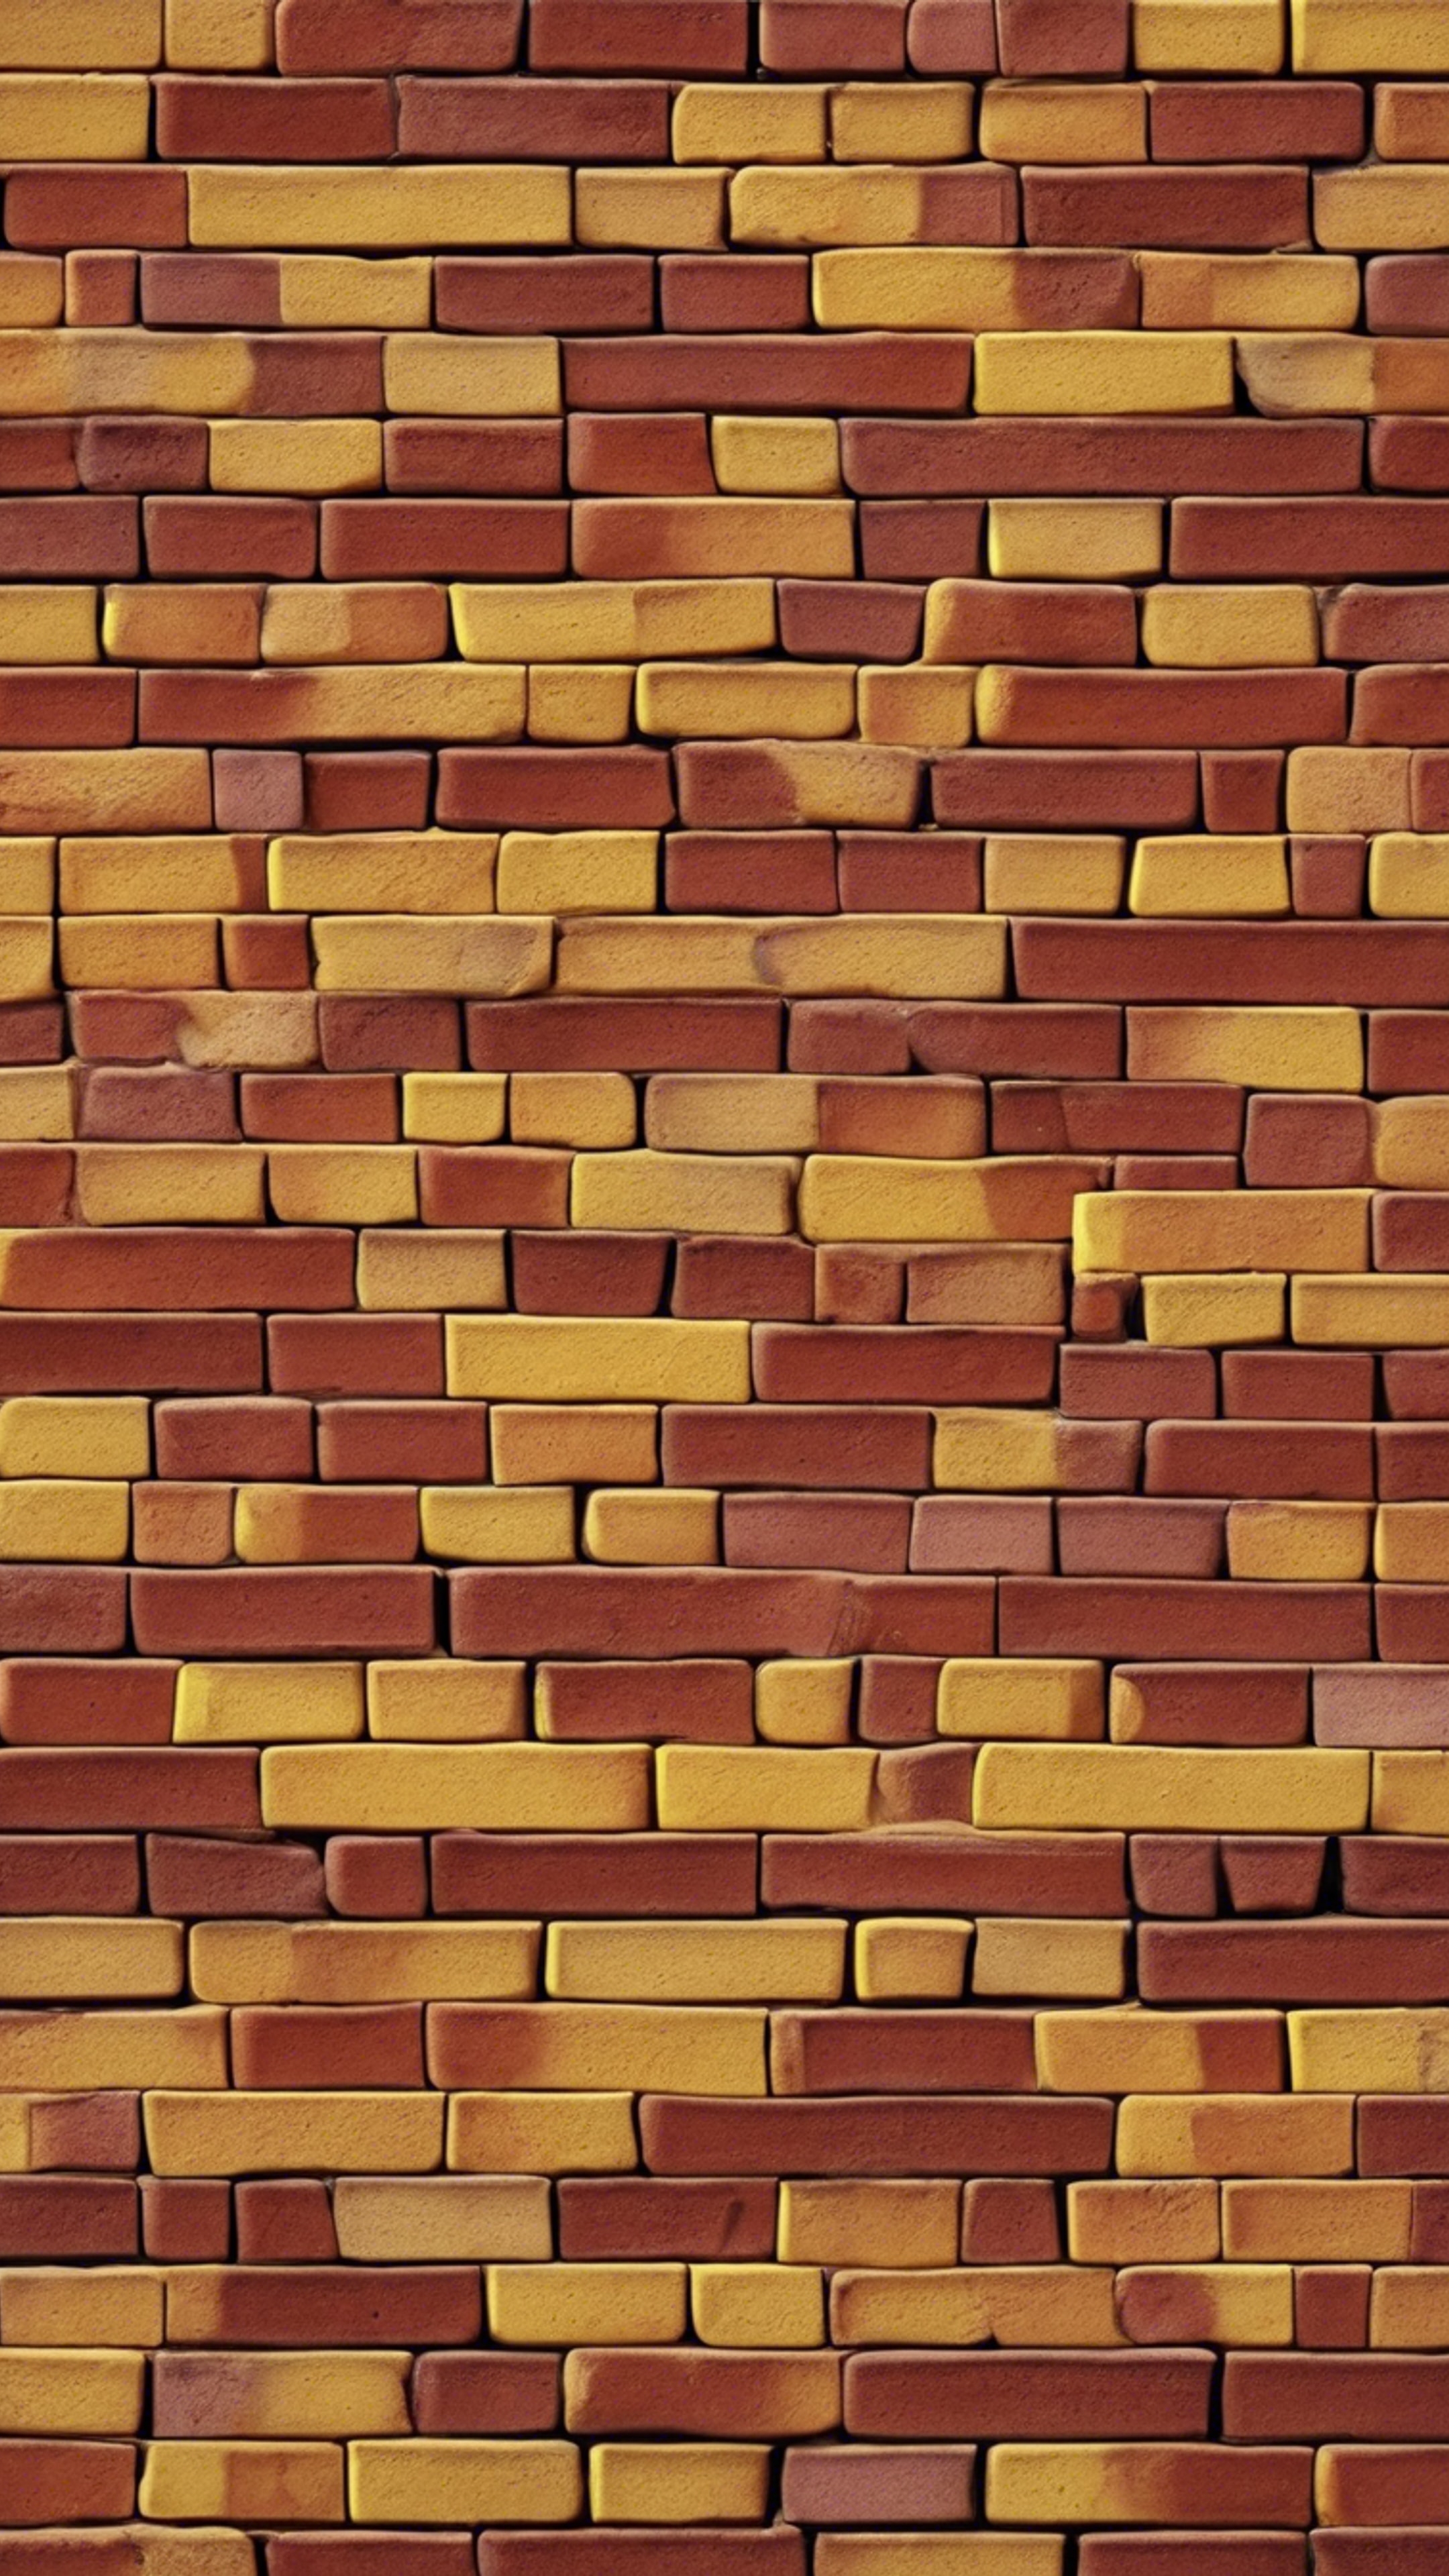 A tight close-up of a seamless, repeating pattern of red and yellow bricks. Divar kağızı[1ac961dc3db44015ab94]